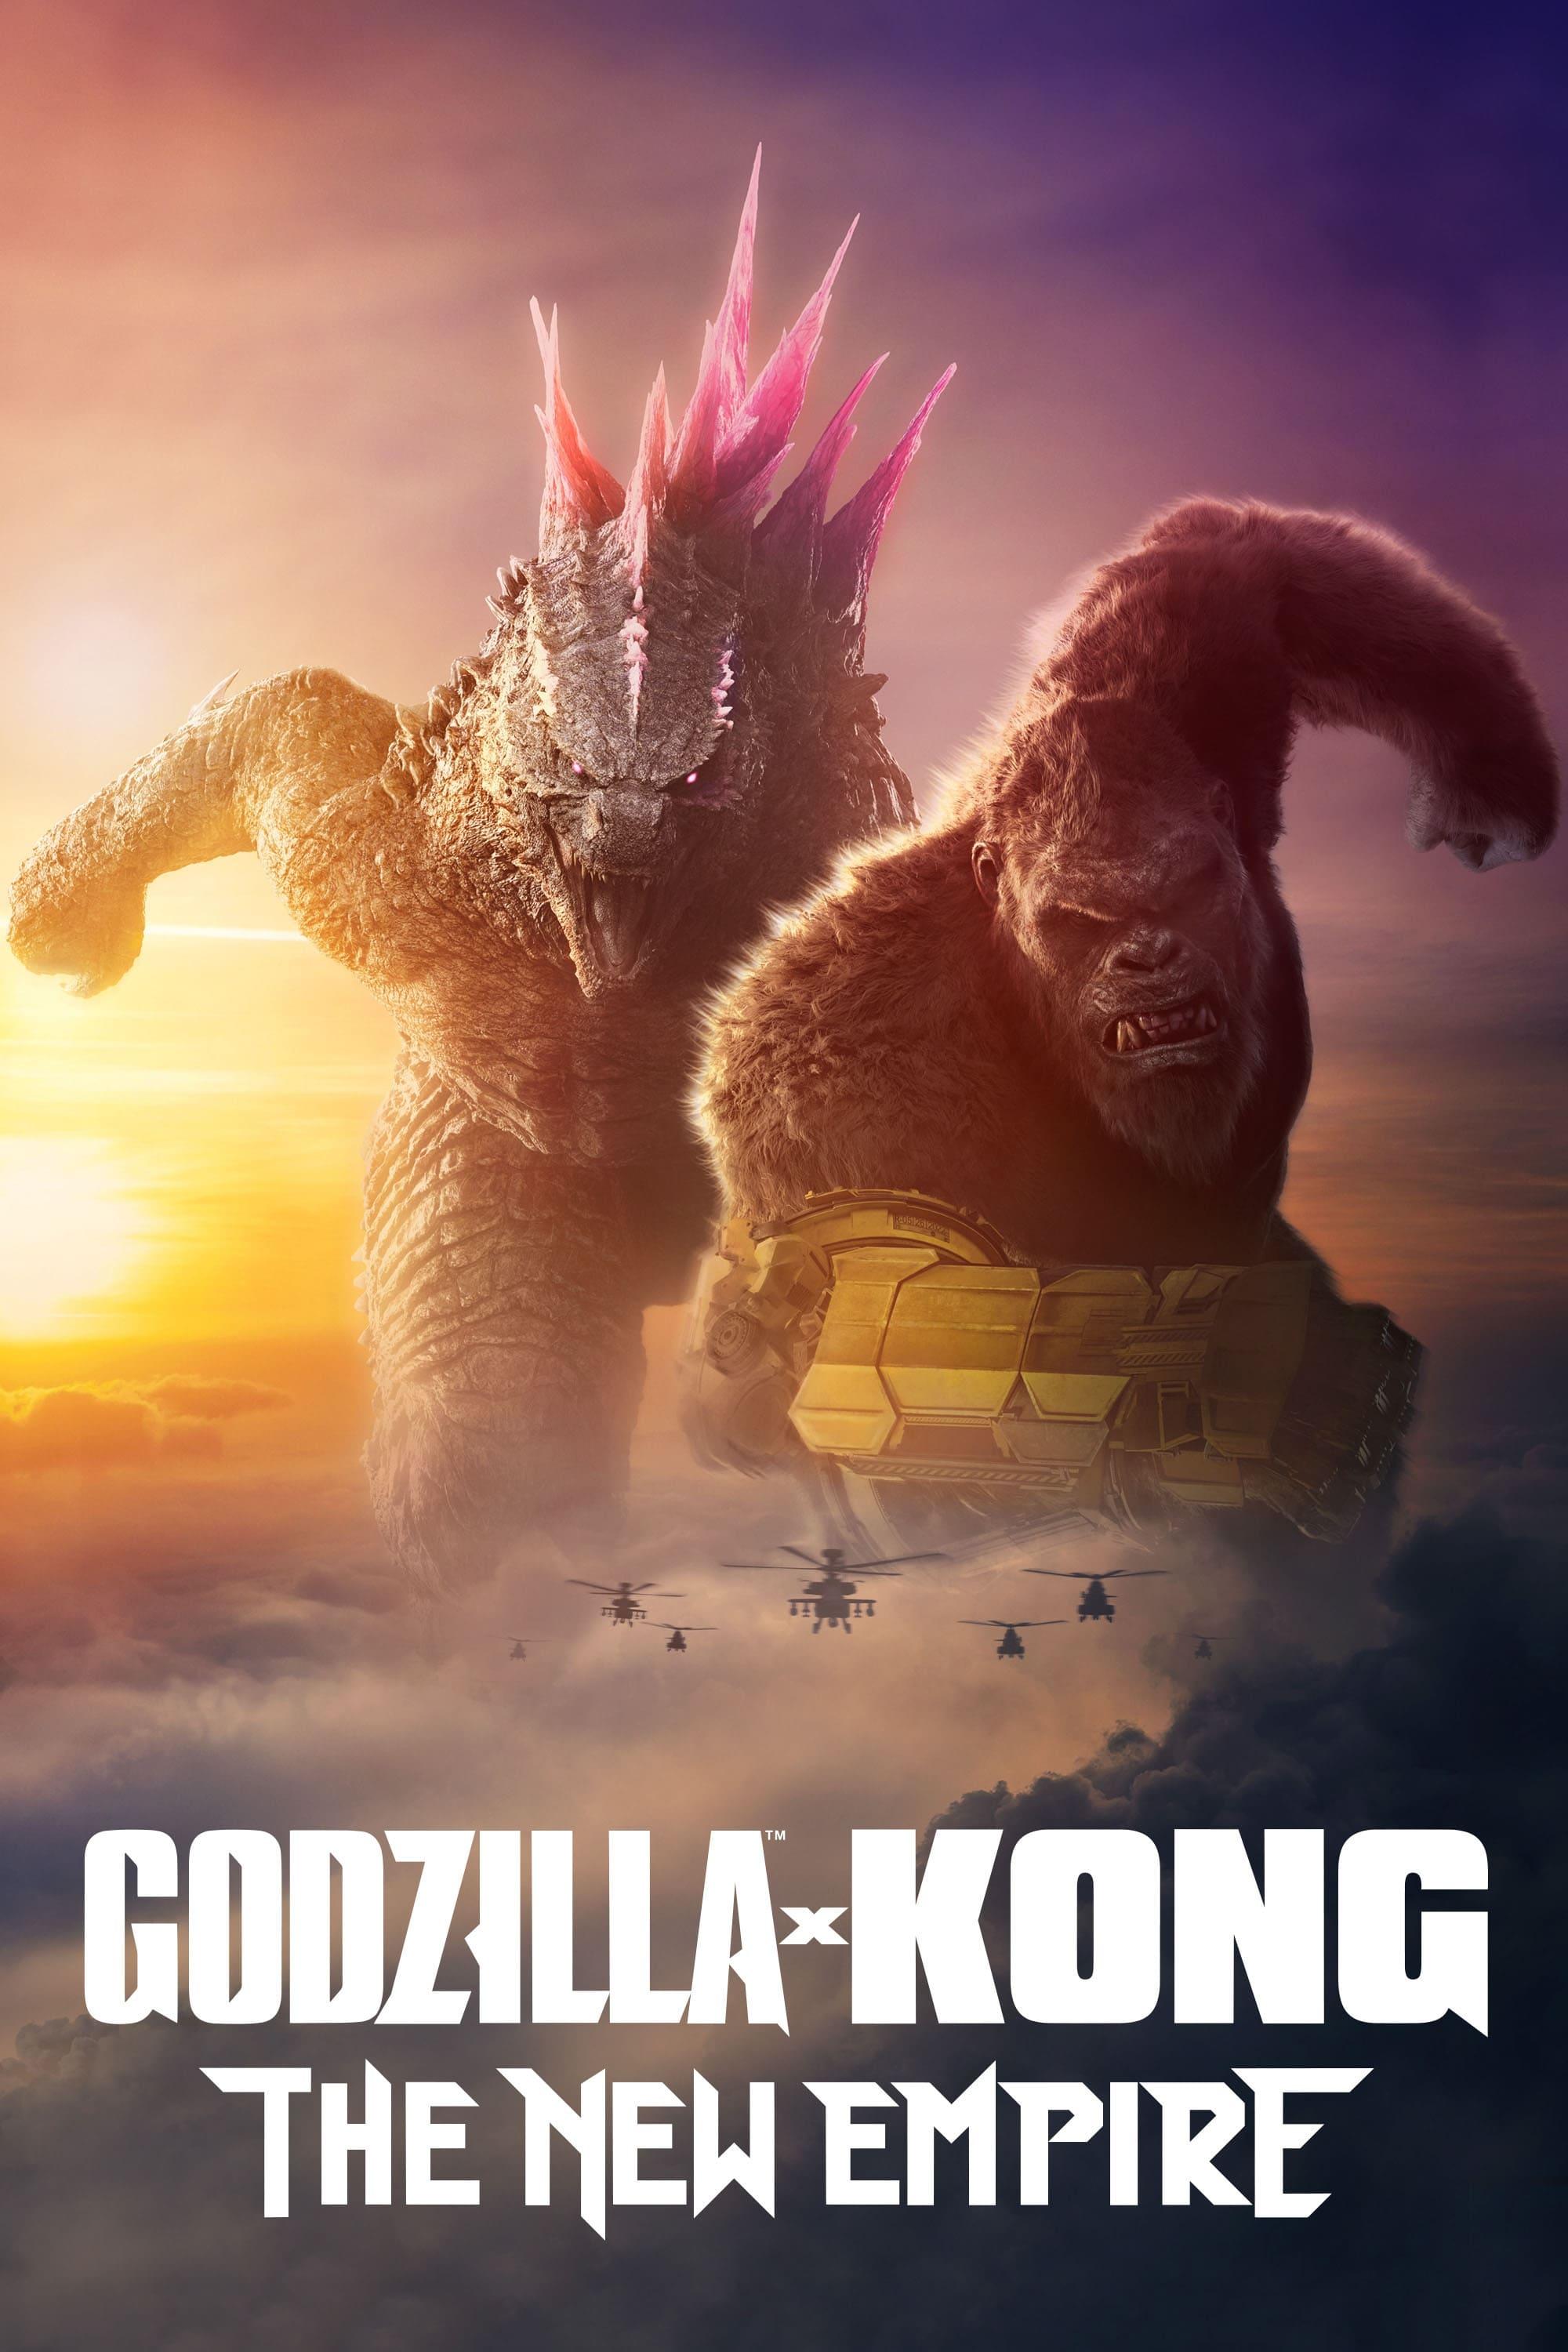 Movie poster of "Godzilla x Kong: The New Empire"